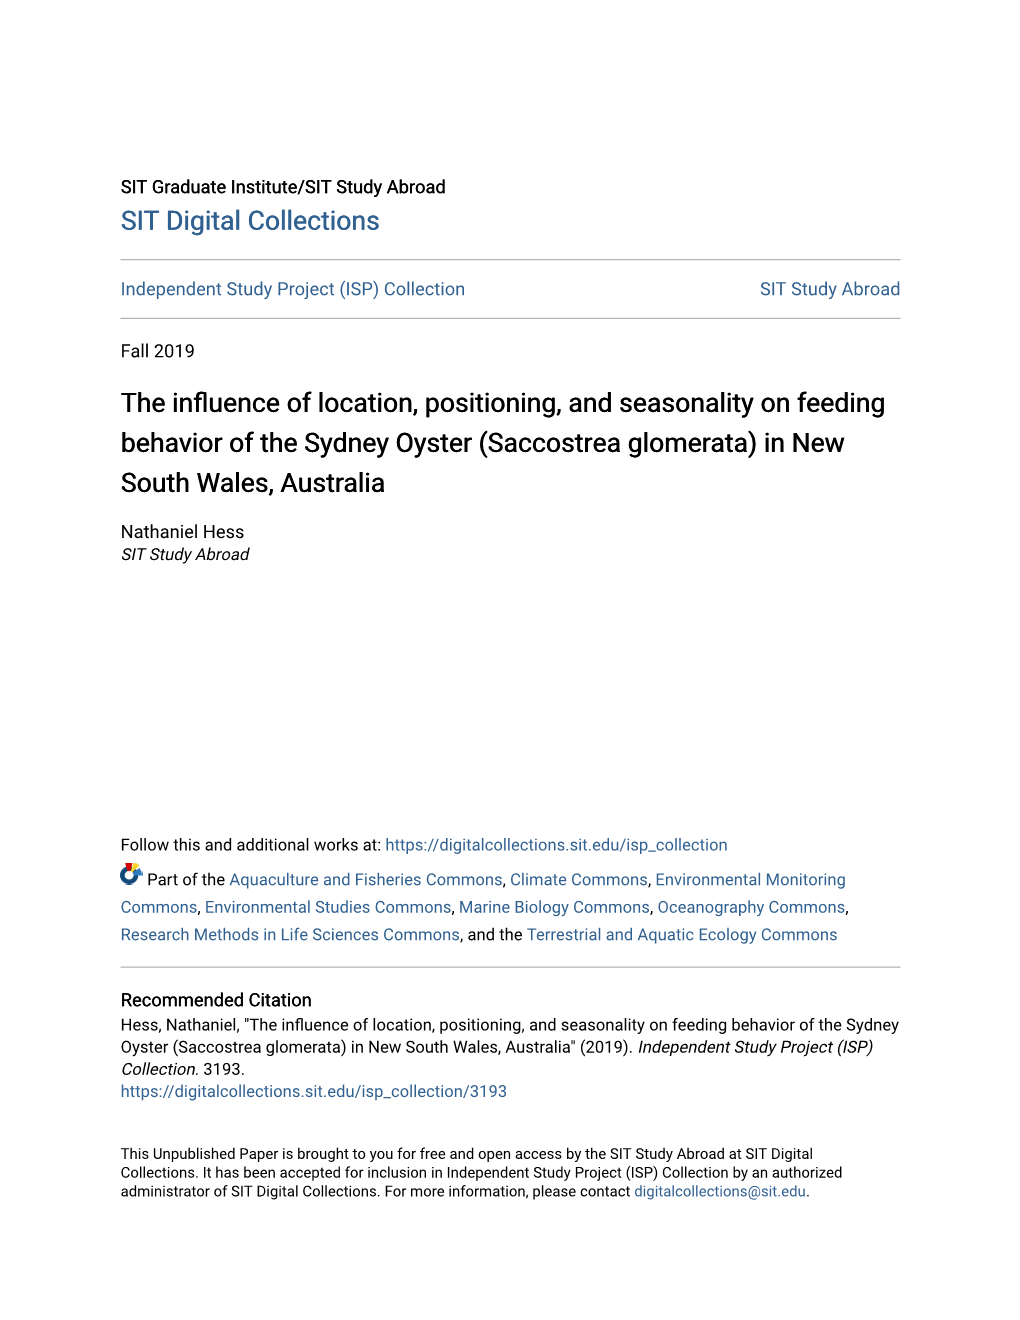 The Influence of Location, Positioning, and Seasonality on Eedingf Behavior of the Sydney Oyster (Saccostrea Glomerata) in New South Wales, Australia